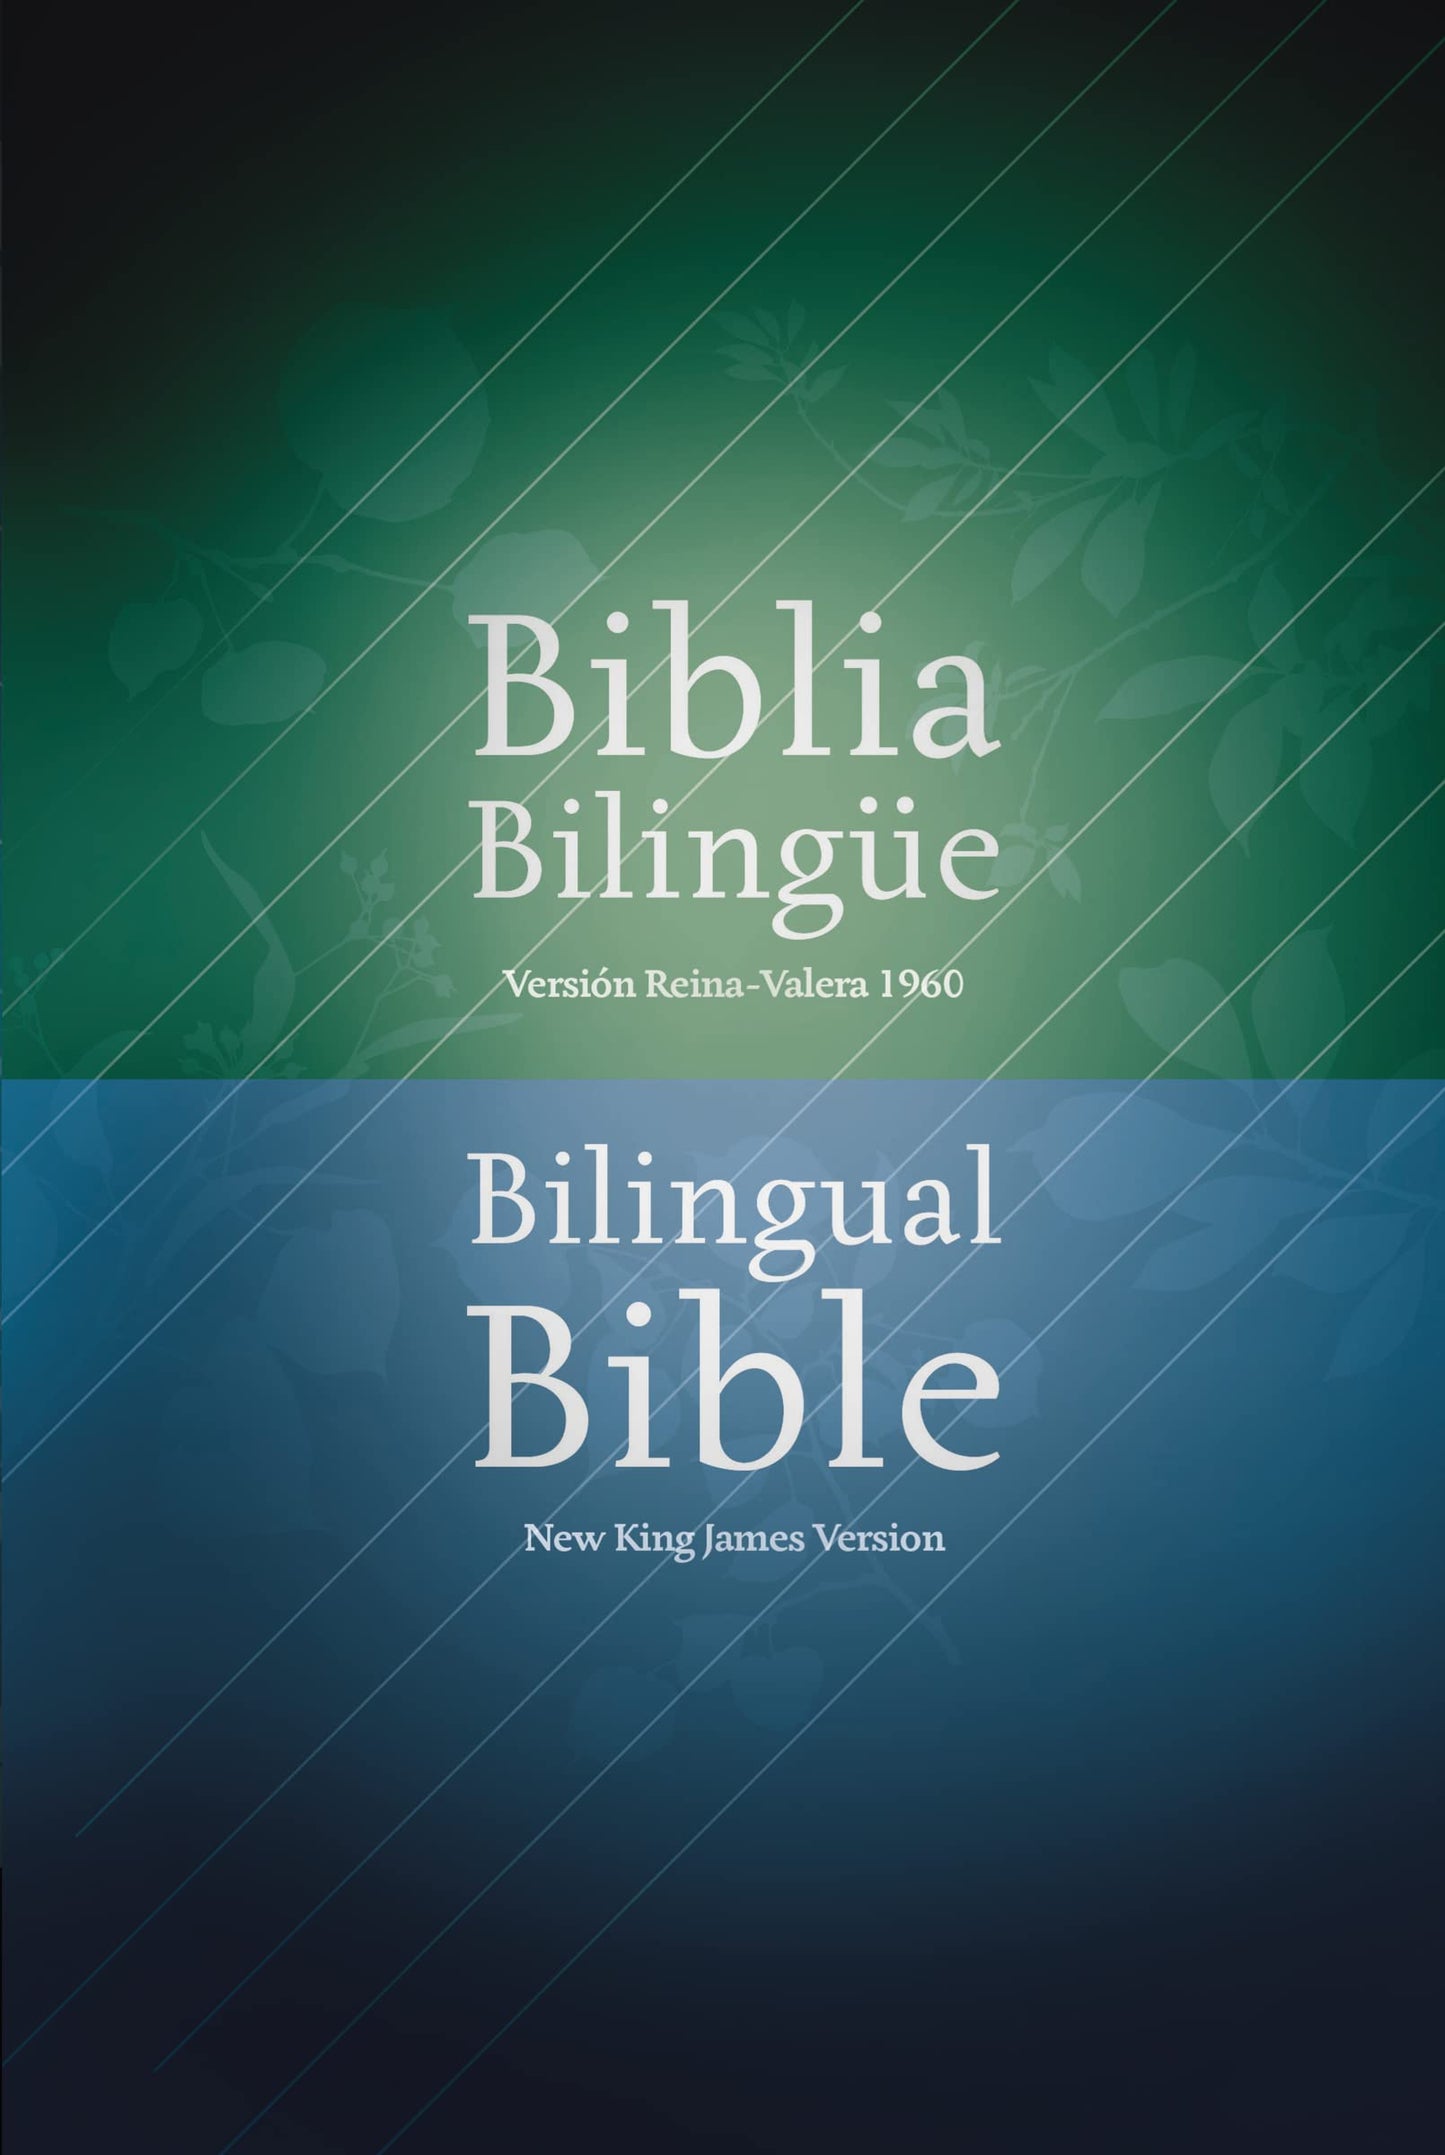 Biblia bilingue Reina Valera 19601960 / NKJV, Tapa Dura / Spanish Bilingual Bible Reina Valera 19601960 / NKJV, Hardcover (Spanish Edition) Hardcover